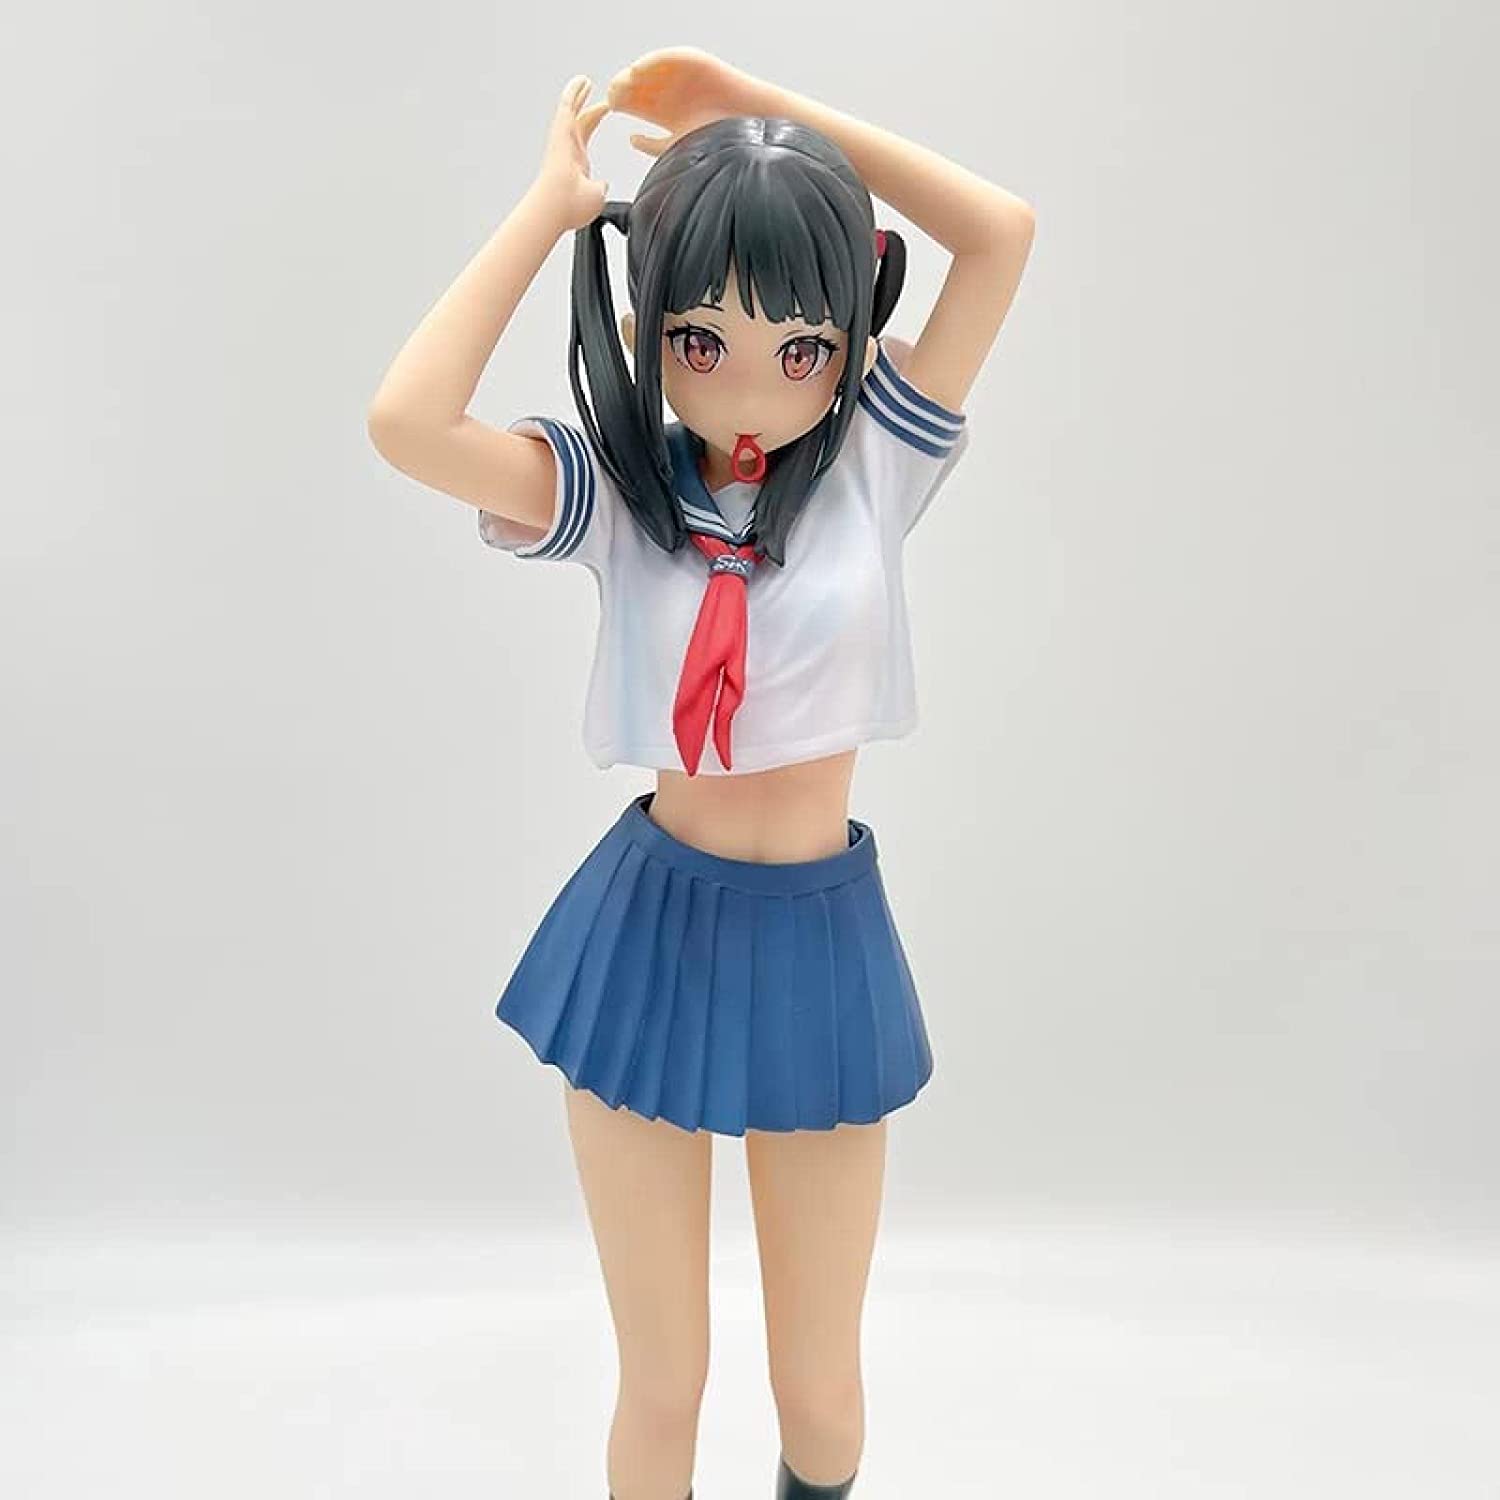 Large Size Diamond Bearbrick 53cm Big Toy Mold Doll High Quality Anime  Action Figure Model Statue Kawaii Decora Halloween Gift